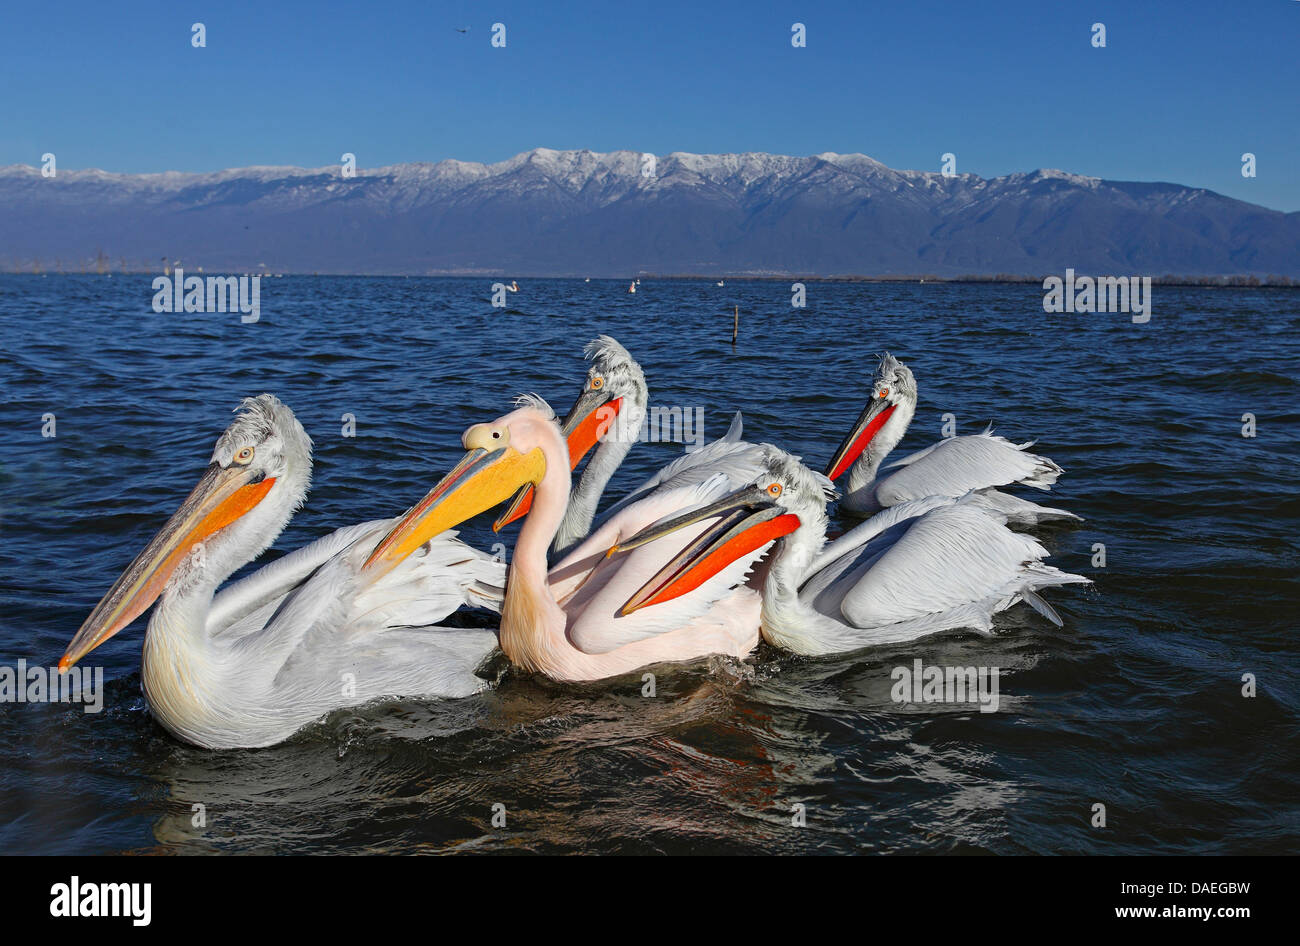 Dalmatian pelican (Pelecanus crispus), Dalmatian pelicans in breeding plumage swimming together with a Great White Pelican, Greece, Lake Kerkini Stock Photo